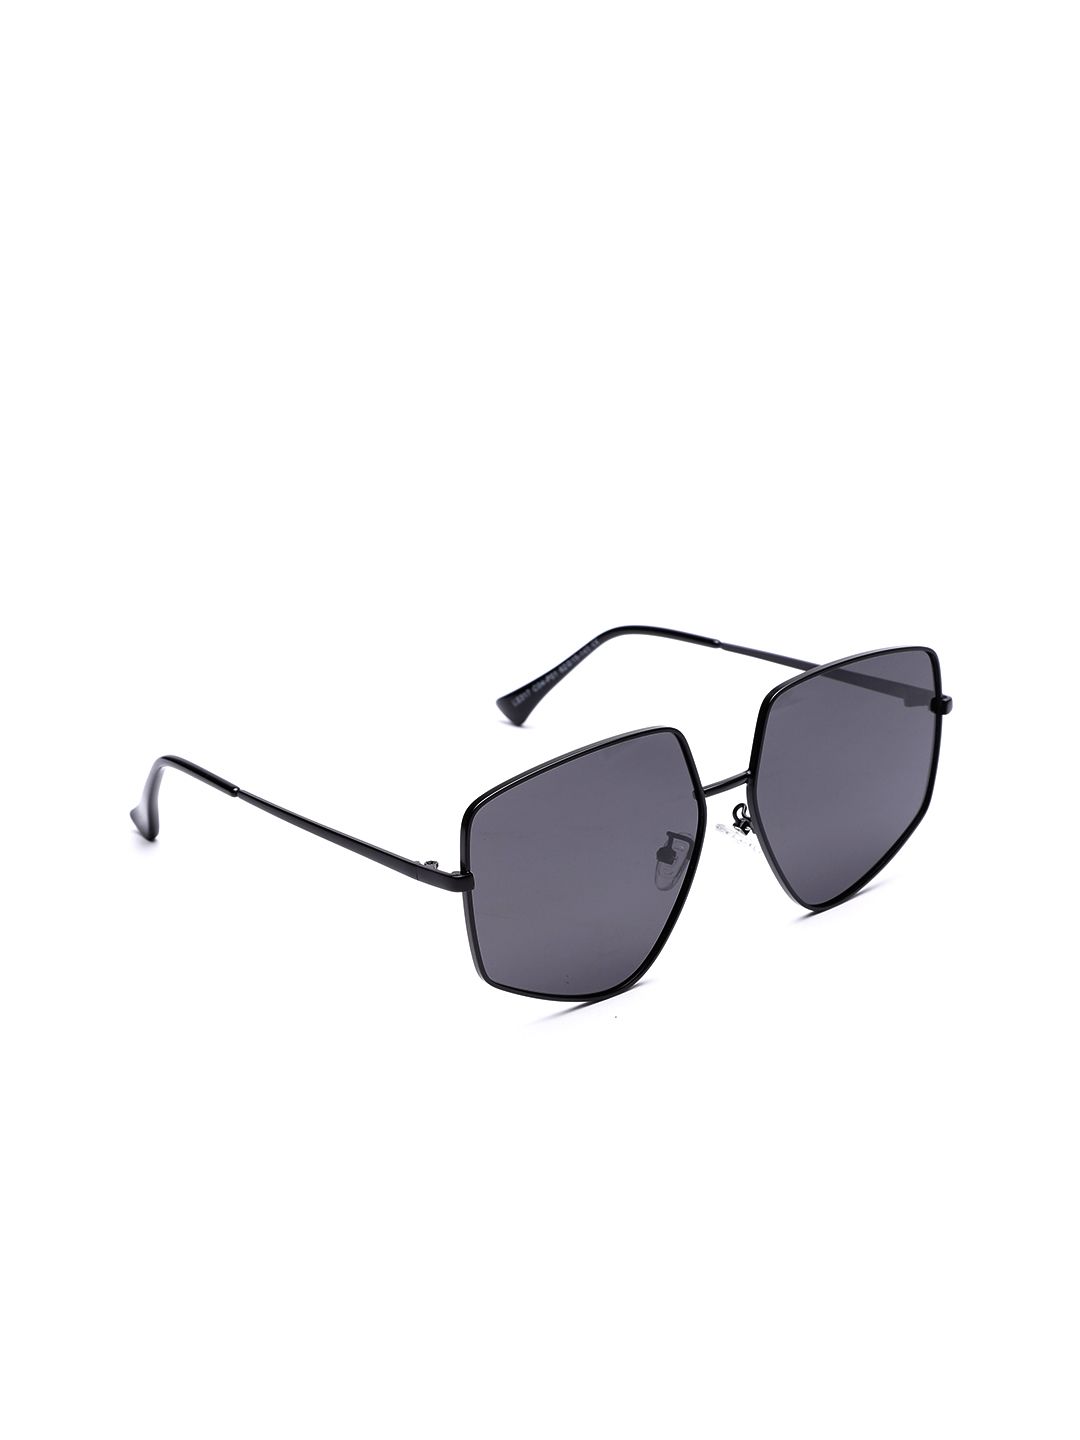 Carlton London Women Black Lens & White Oversized Sunglasses CLSW025 Price in India